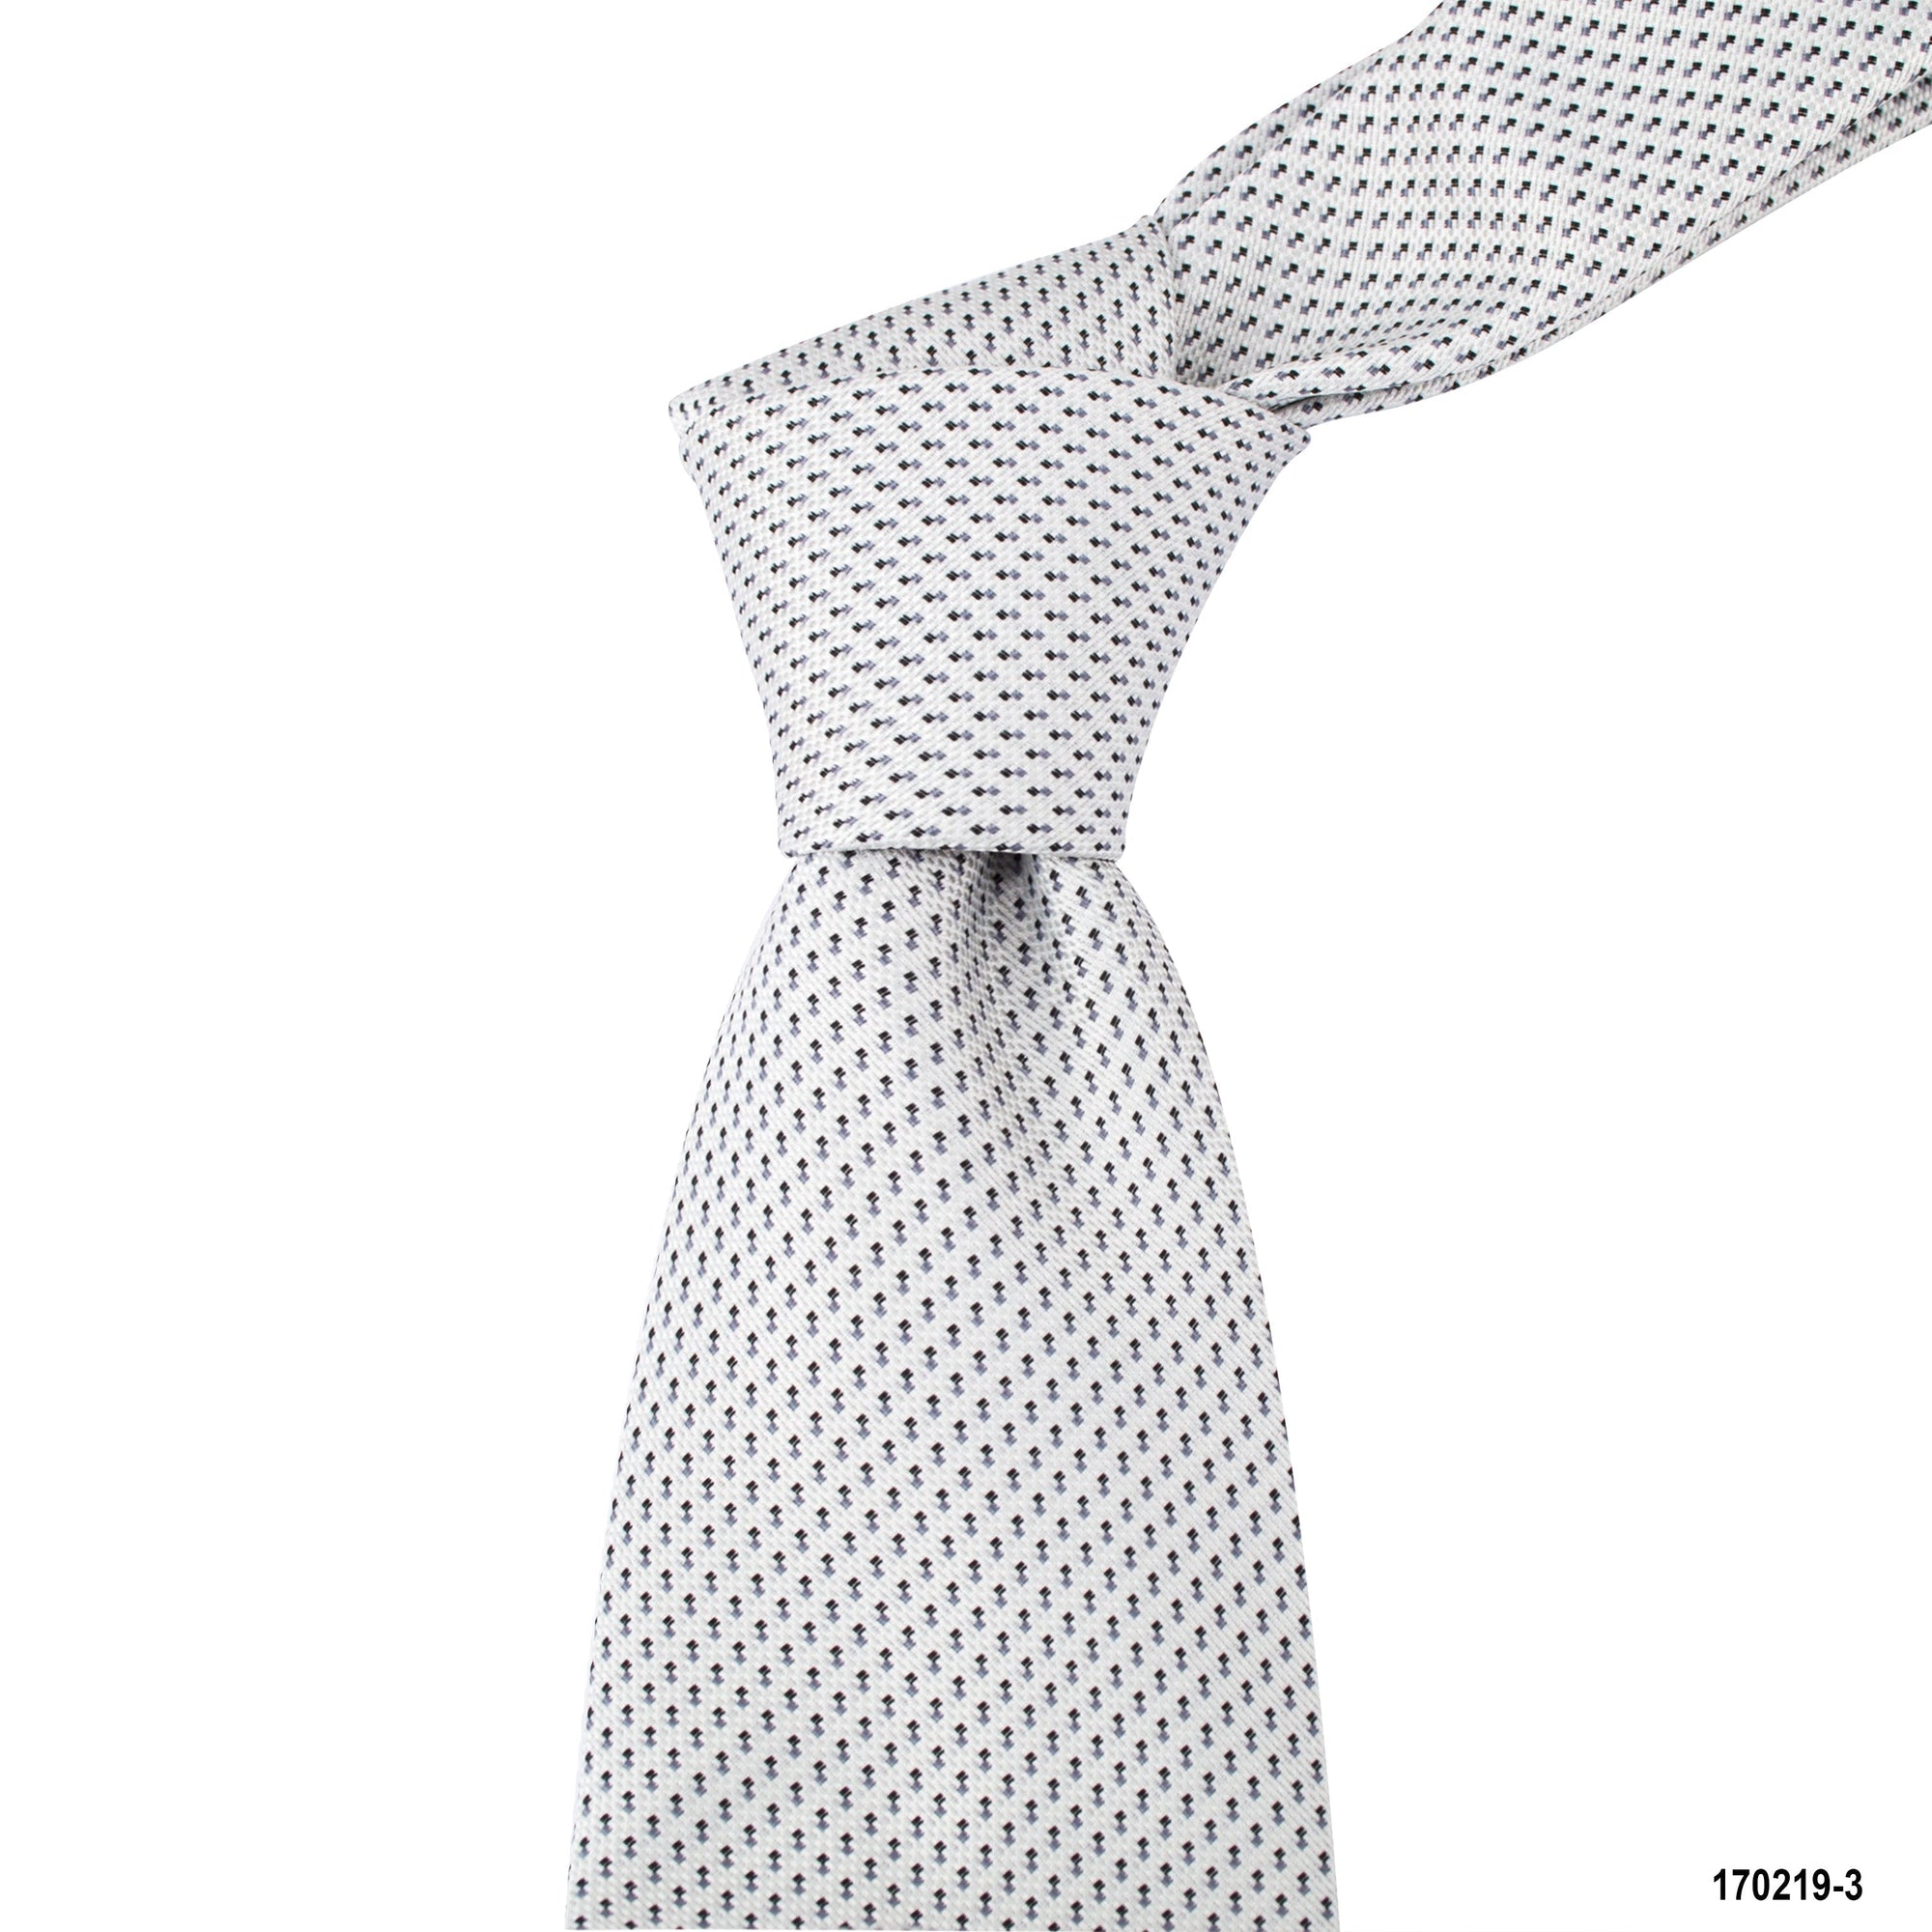 MarZthomson 8cm Double Diamond detail Tie in White M-Cufflinks.com.sg | Neckties.com.sg